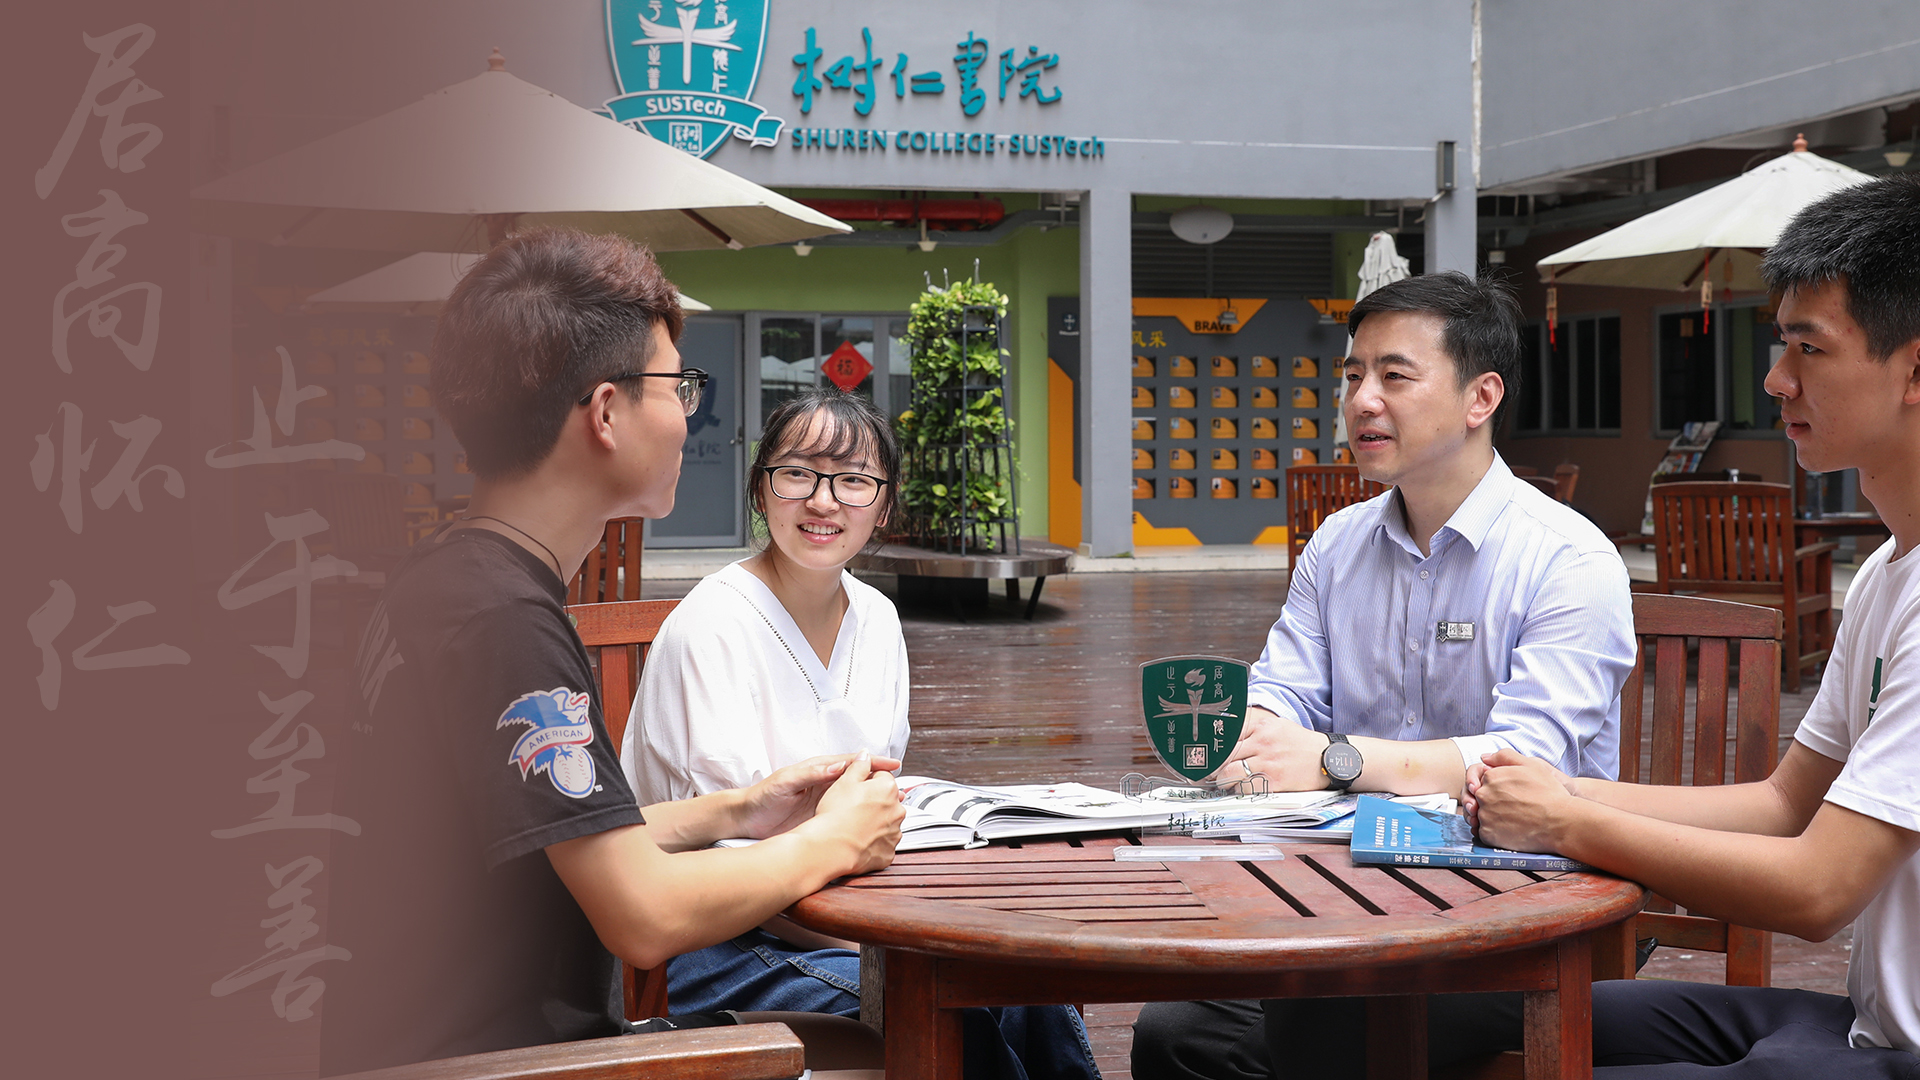 Dean Huang Limin of Shuren College: Building a Thoughtful Community of Interdisciplinary Integrators